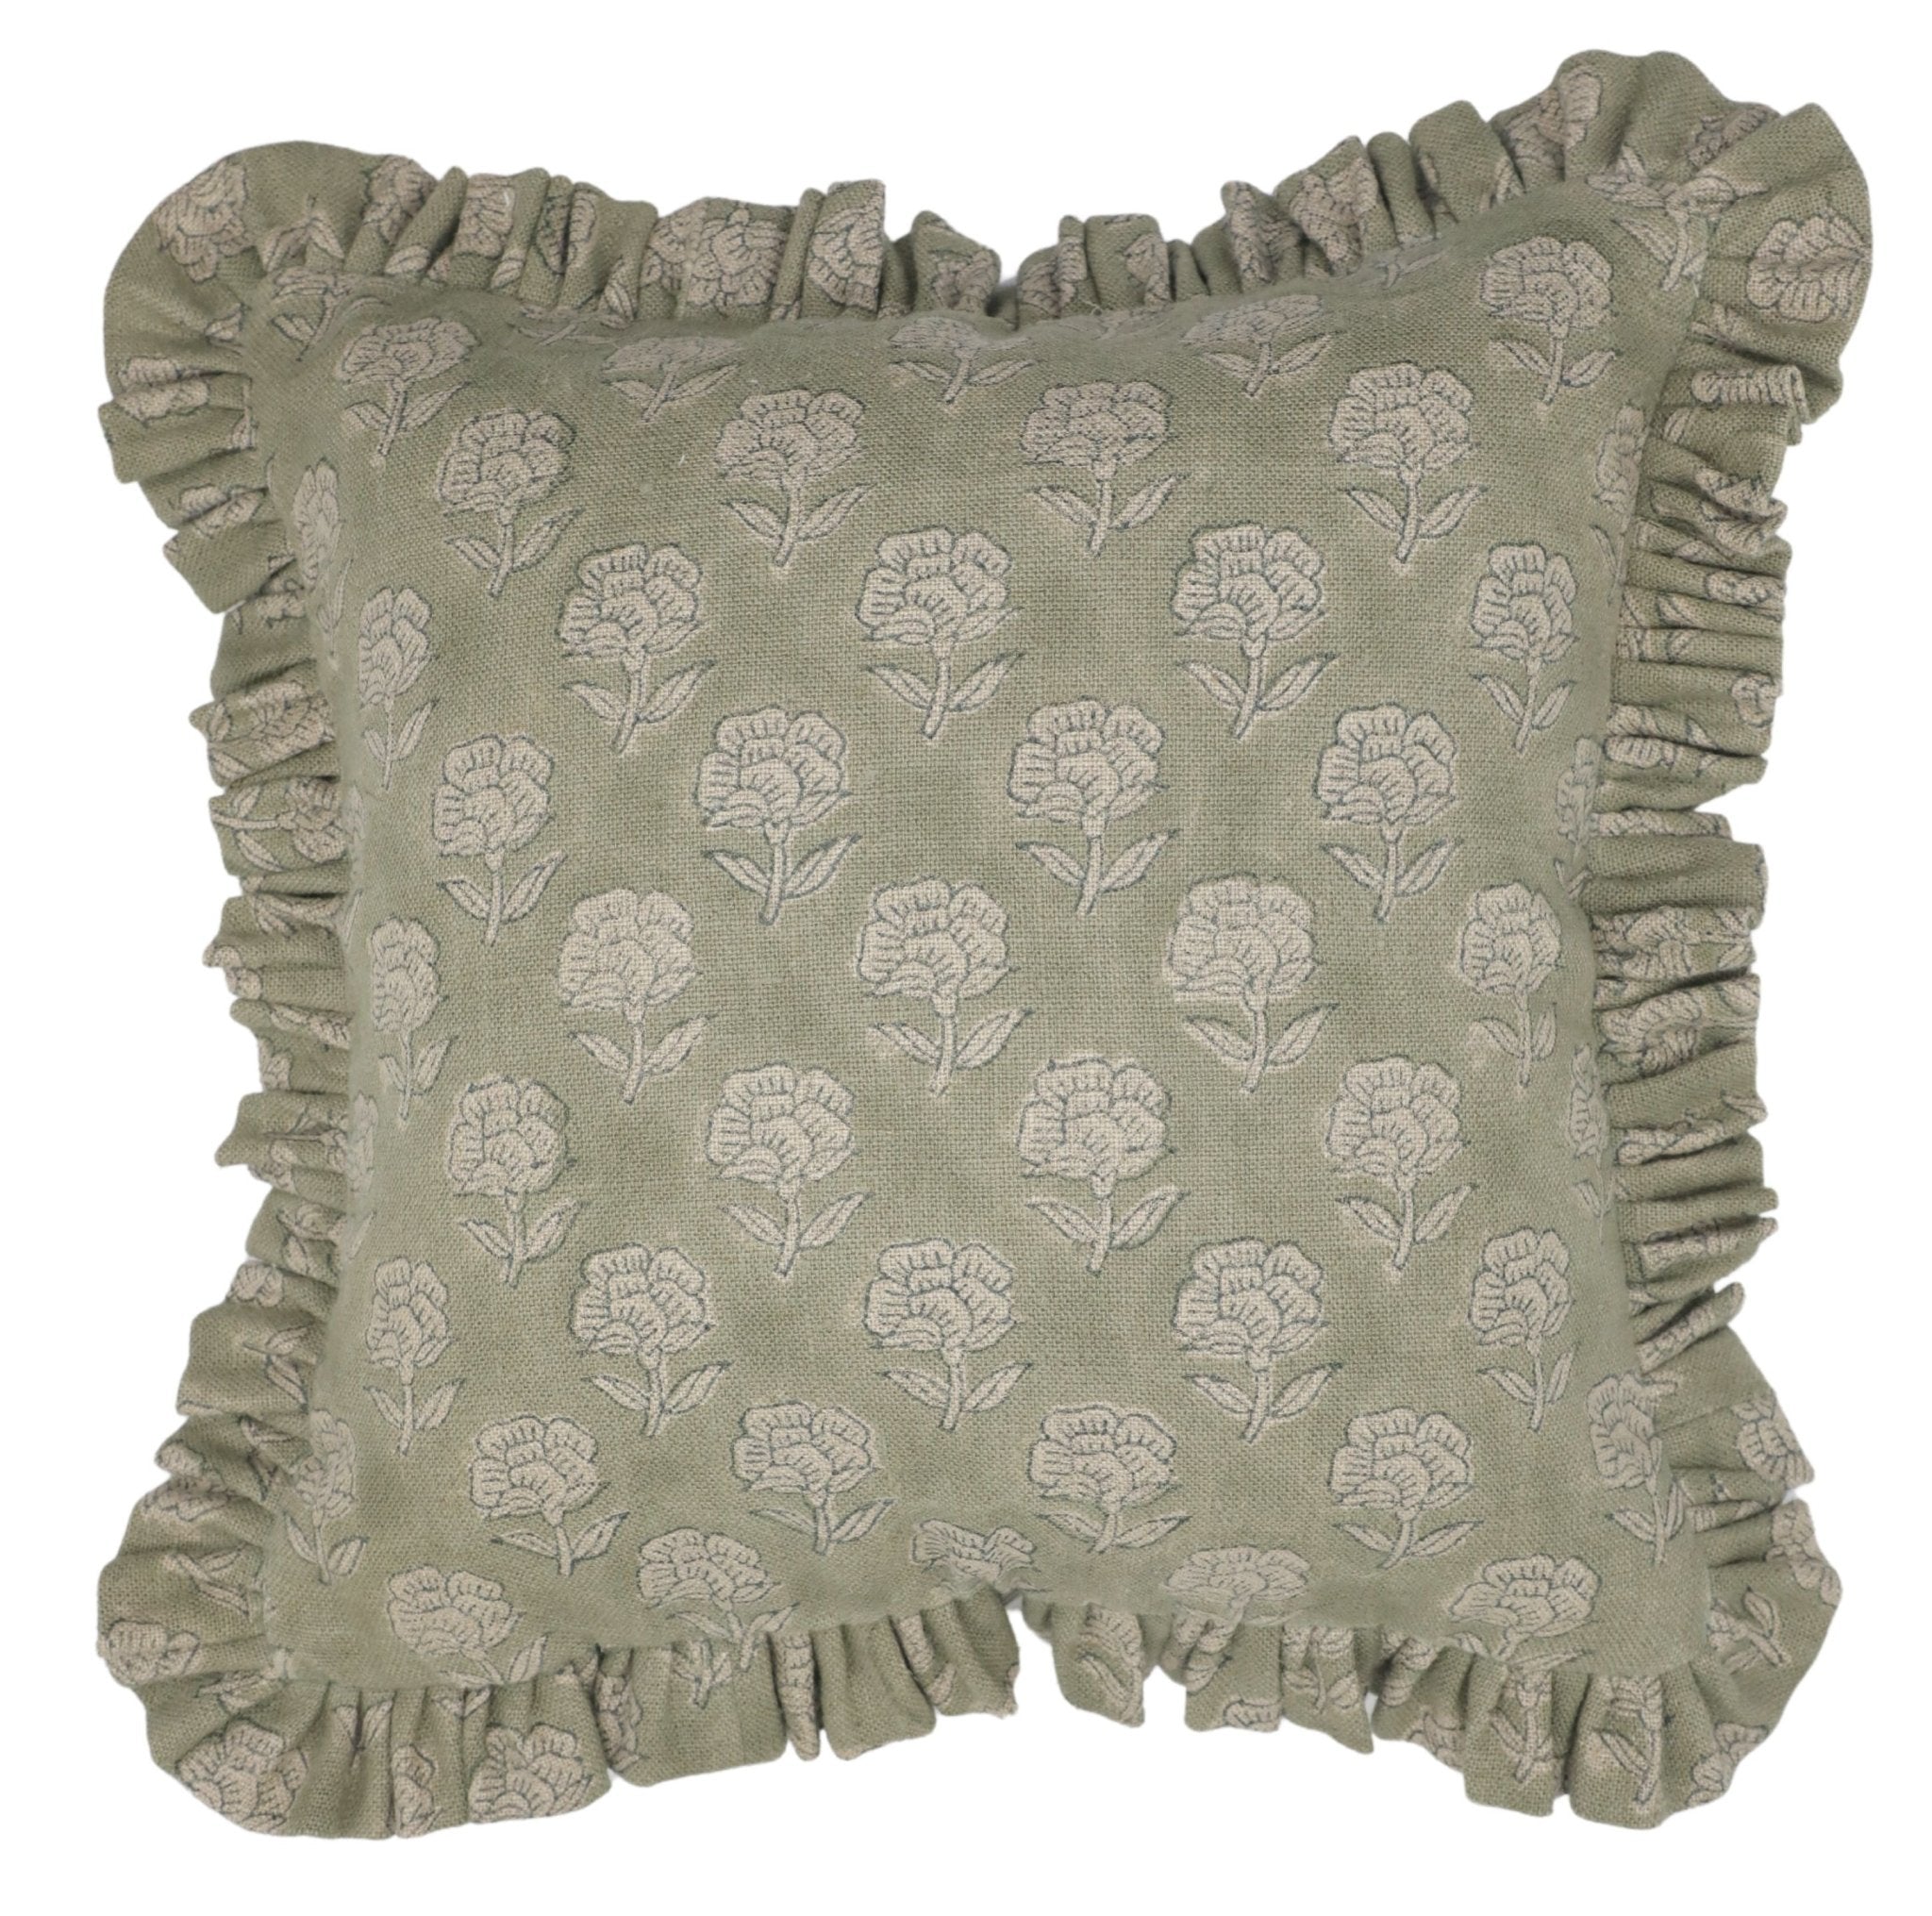 ROHINI - Ruffle Pillow Cover - FABDIVINE LLCROHINI - Ruffle Pillow CoverTL Frill Pillow CoverFABDIVINE LLC